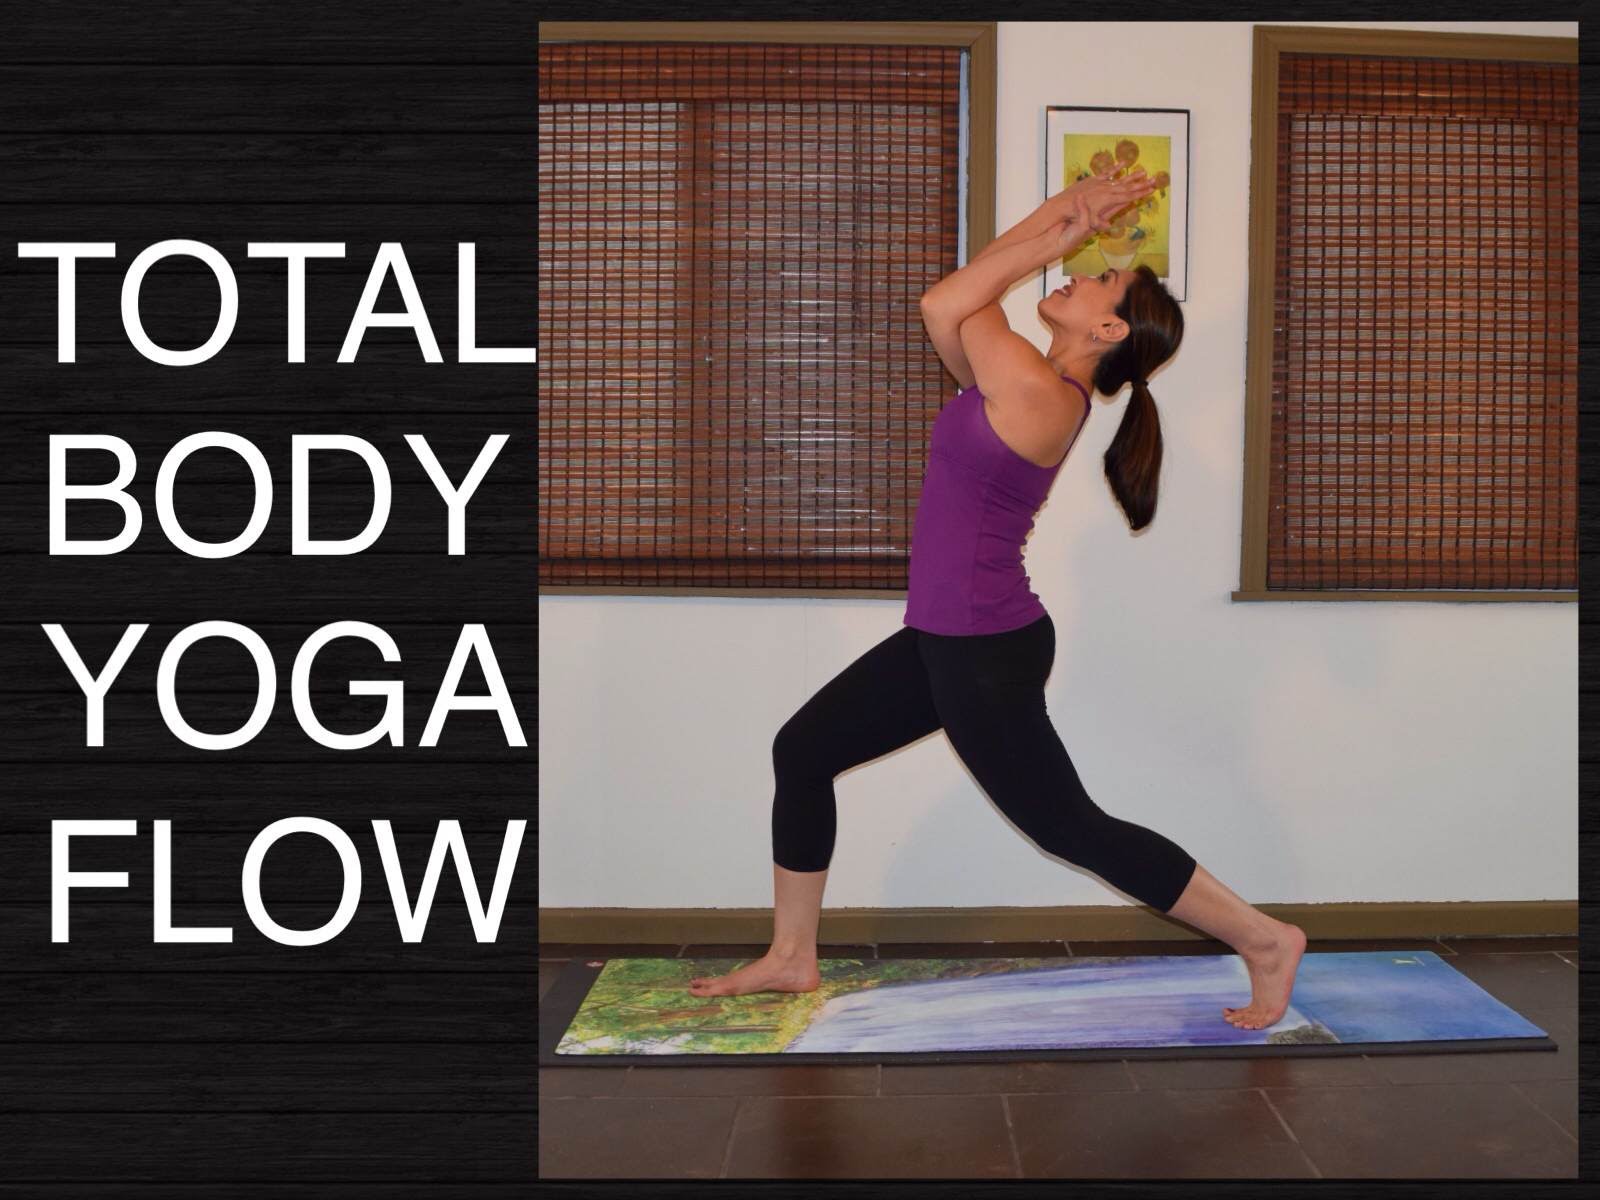 7 Yoga Poses to Tone the Body - Yoga with Kassandra Blog